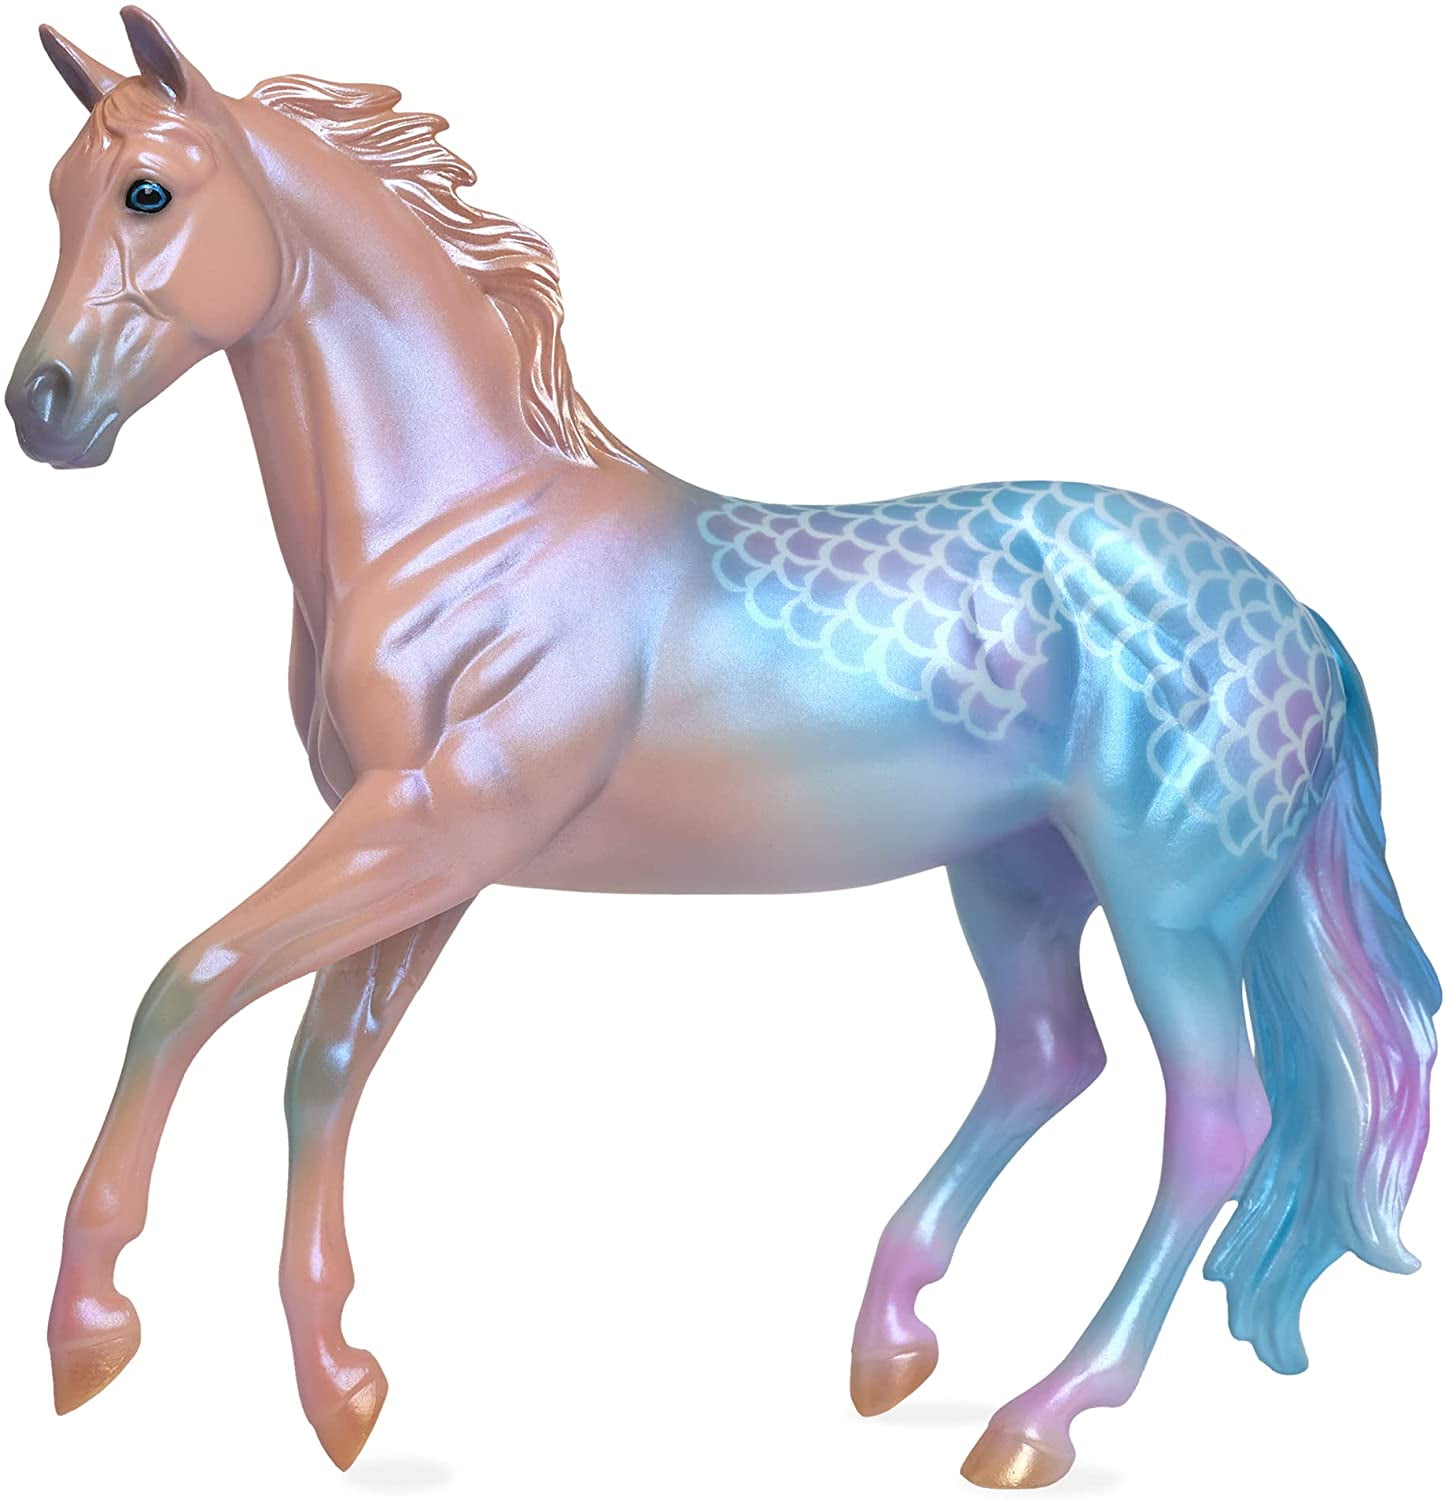 Breyer Horses - Freedom Series 1:12 Scale Le Mer Unicorn Action 